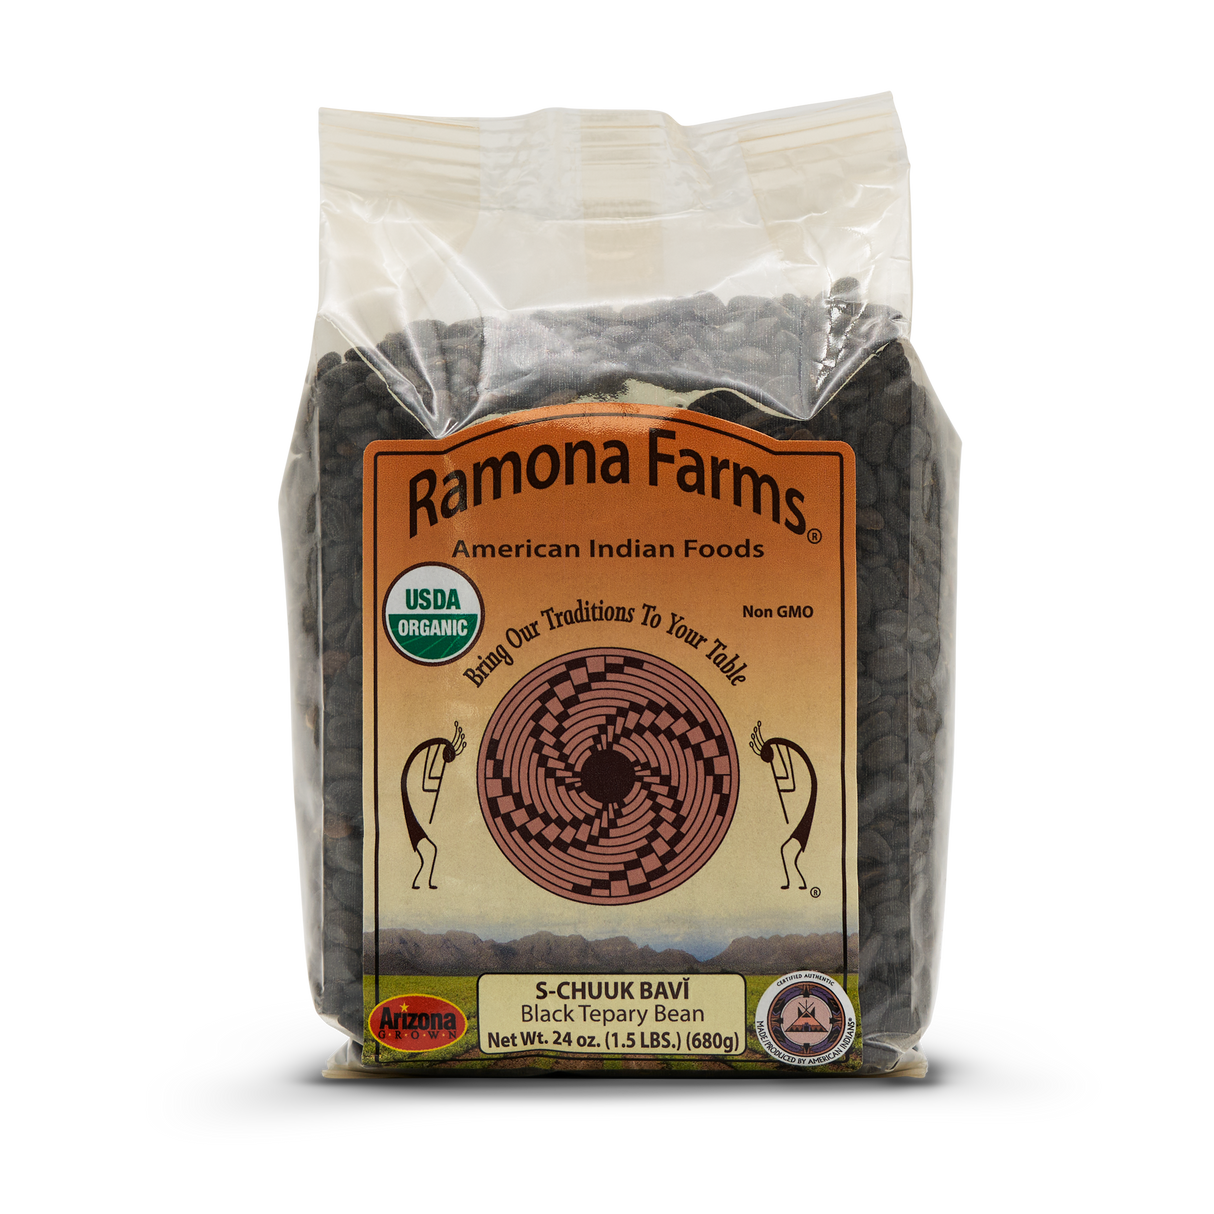 Ramona Farms Black Tepary Beans (S-Chuuk Bavi)